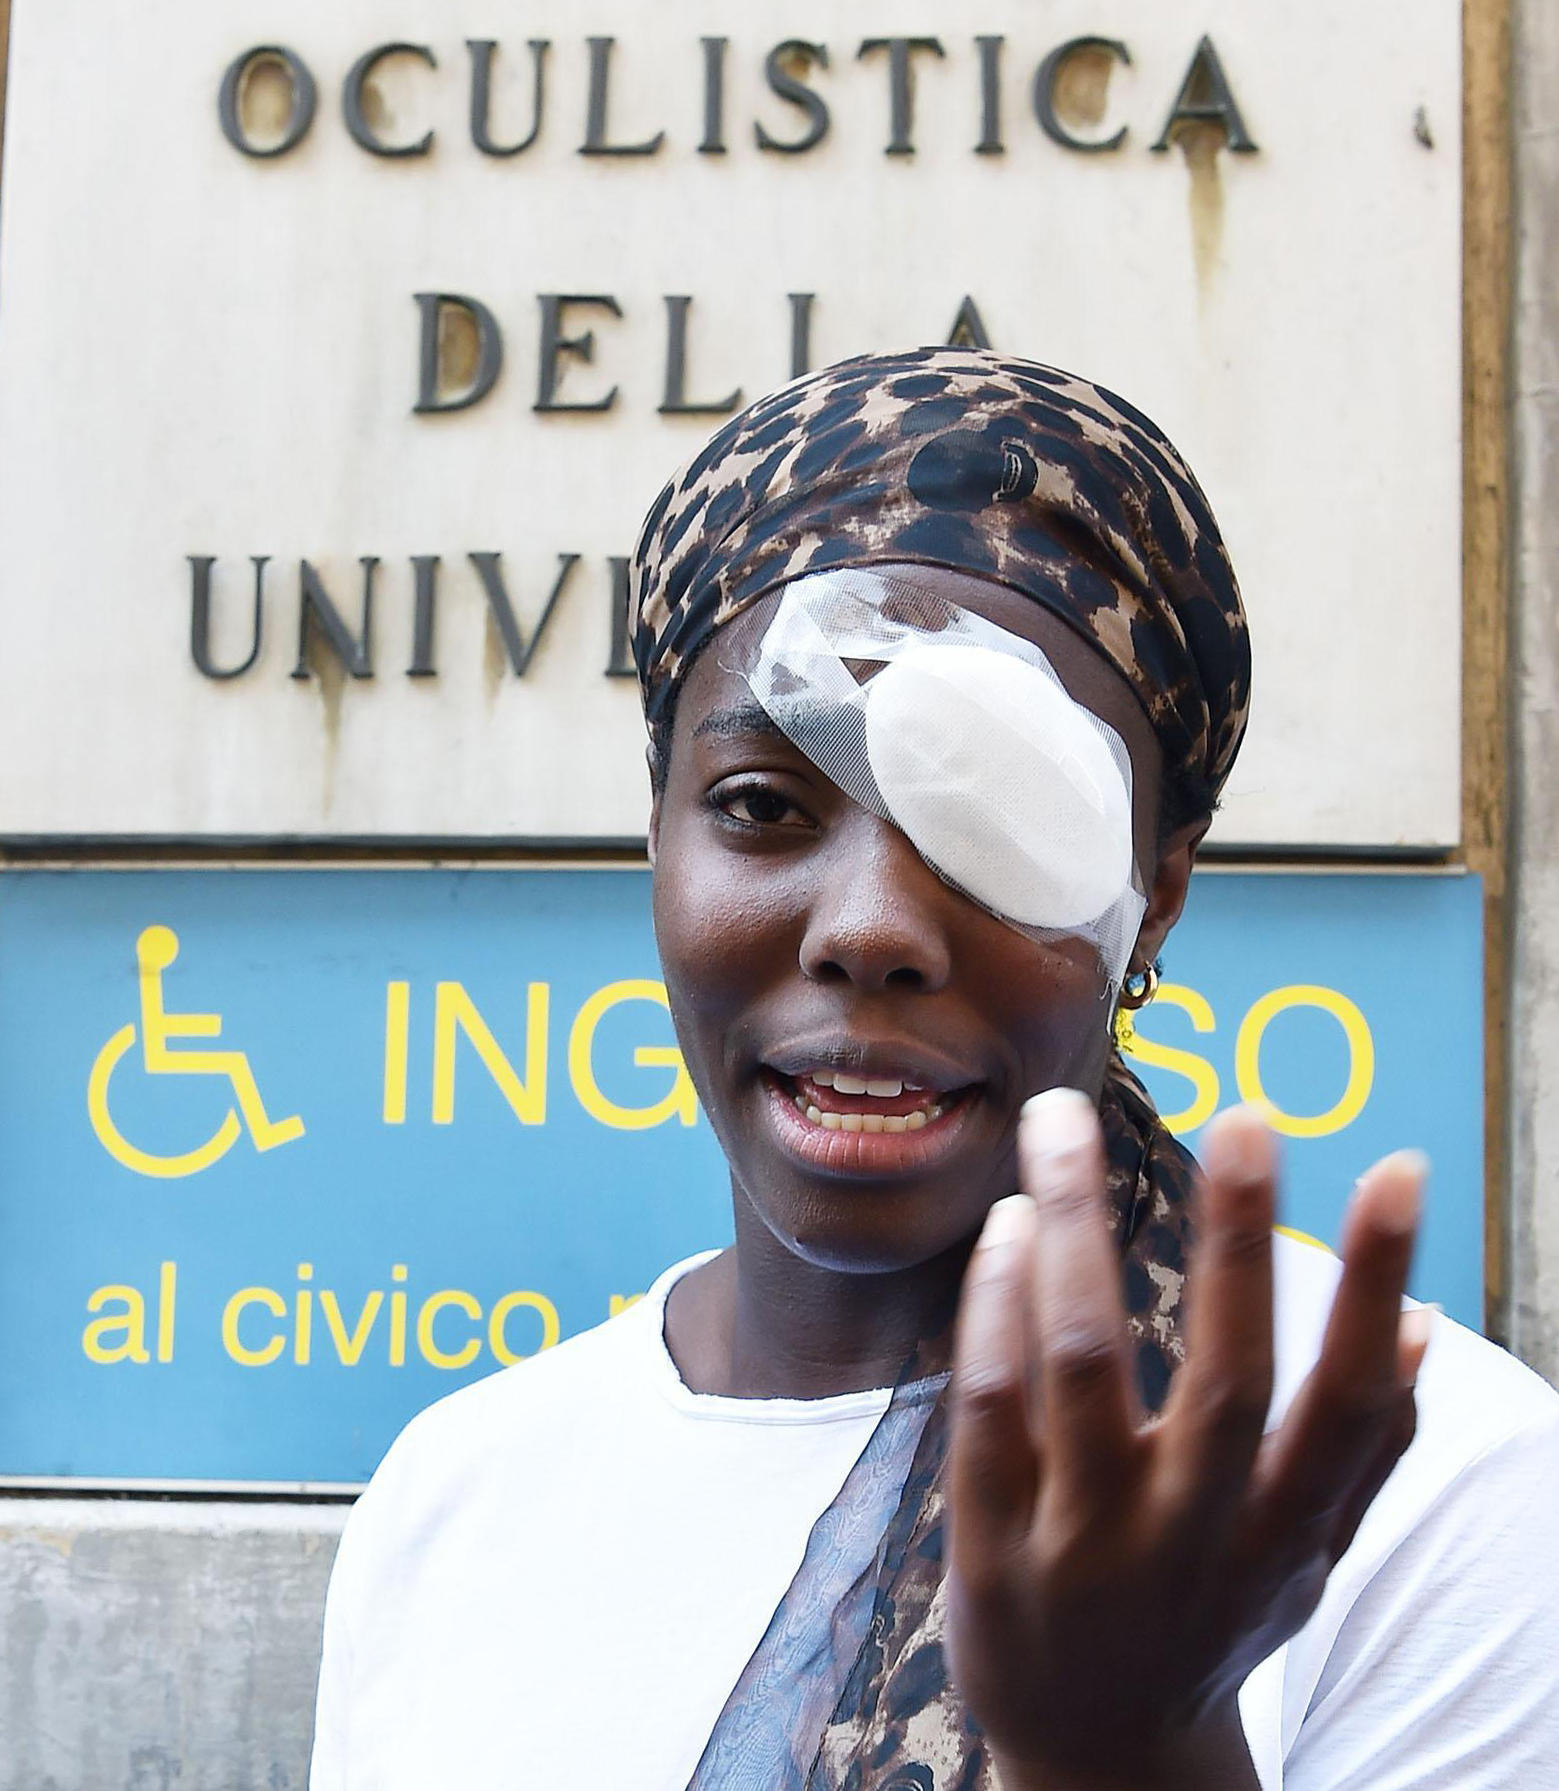 Rasistisk våldsvåg skakar Italien efter valet | Arbetaren